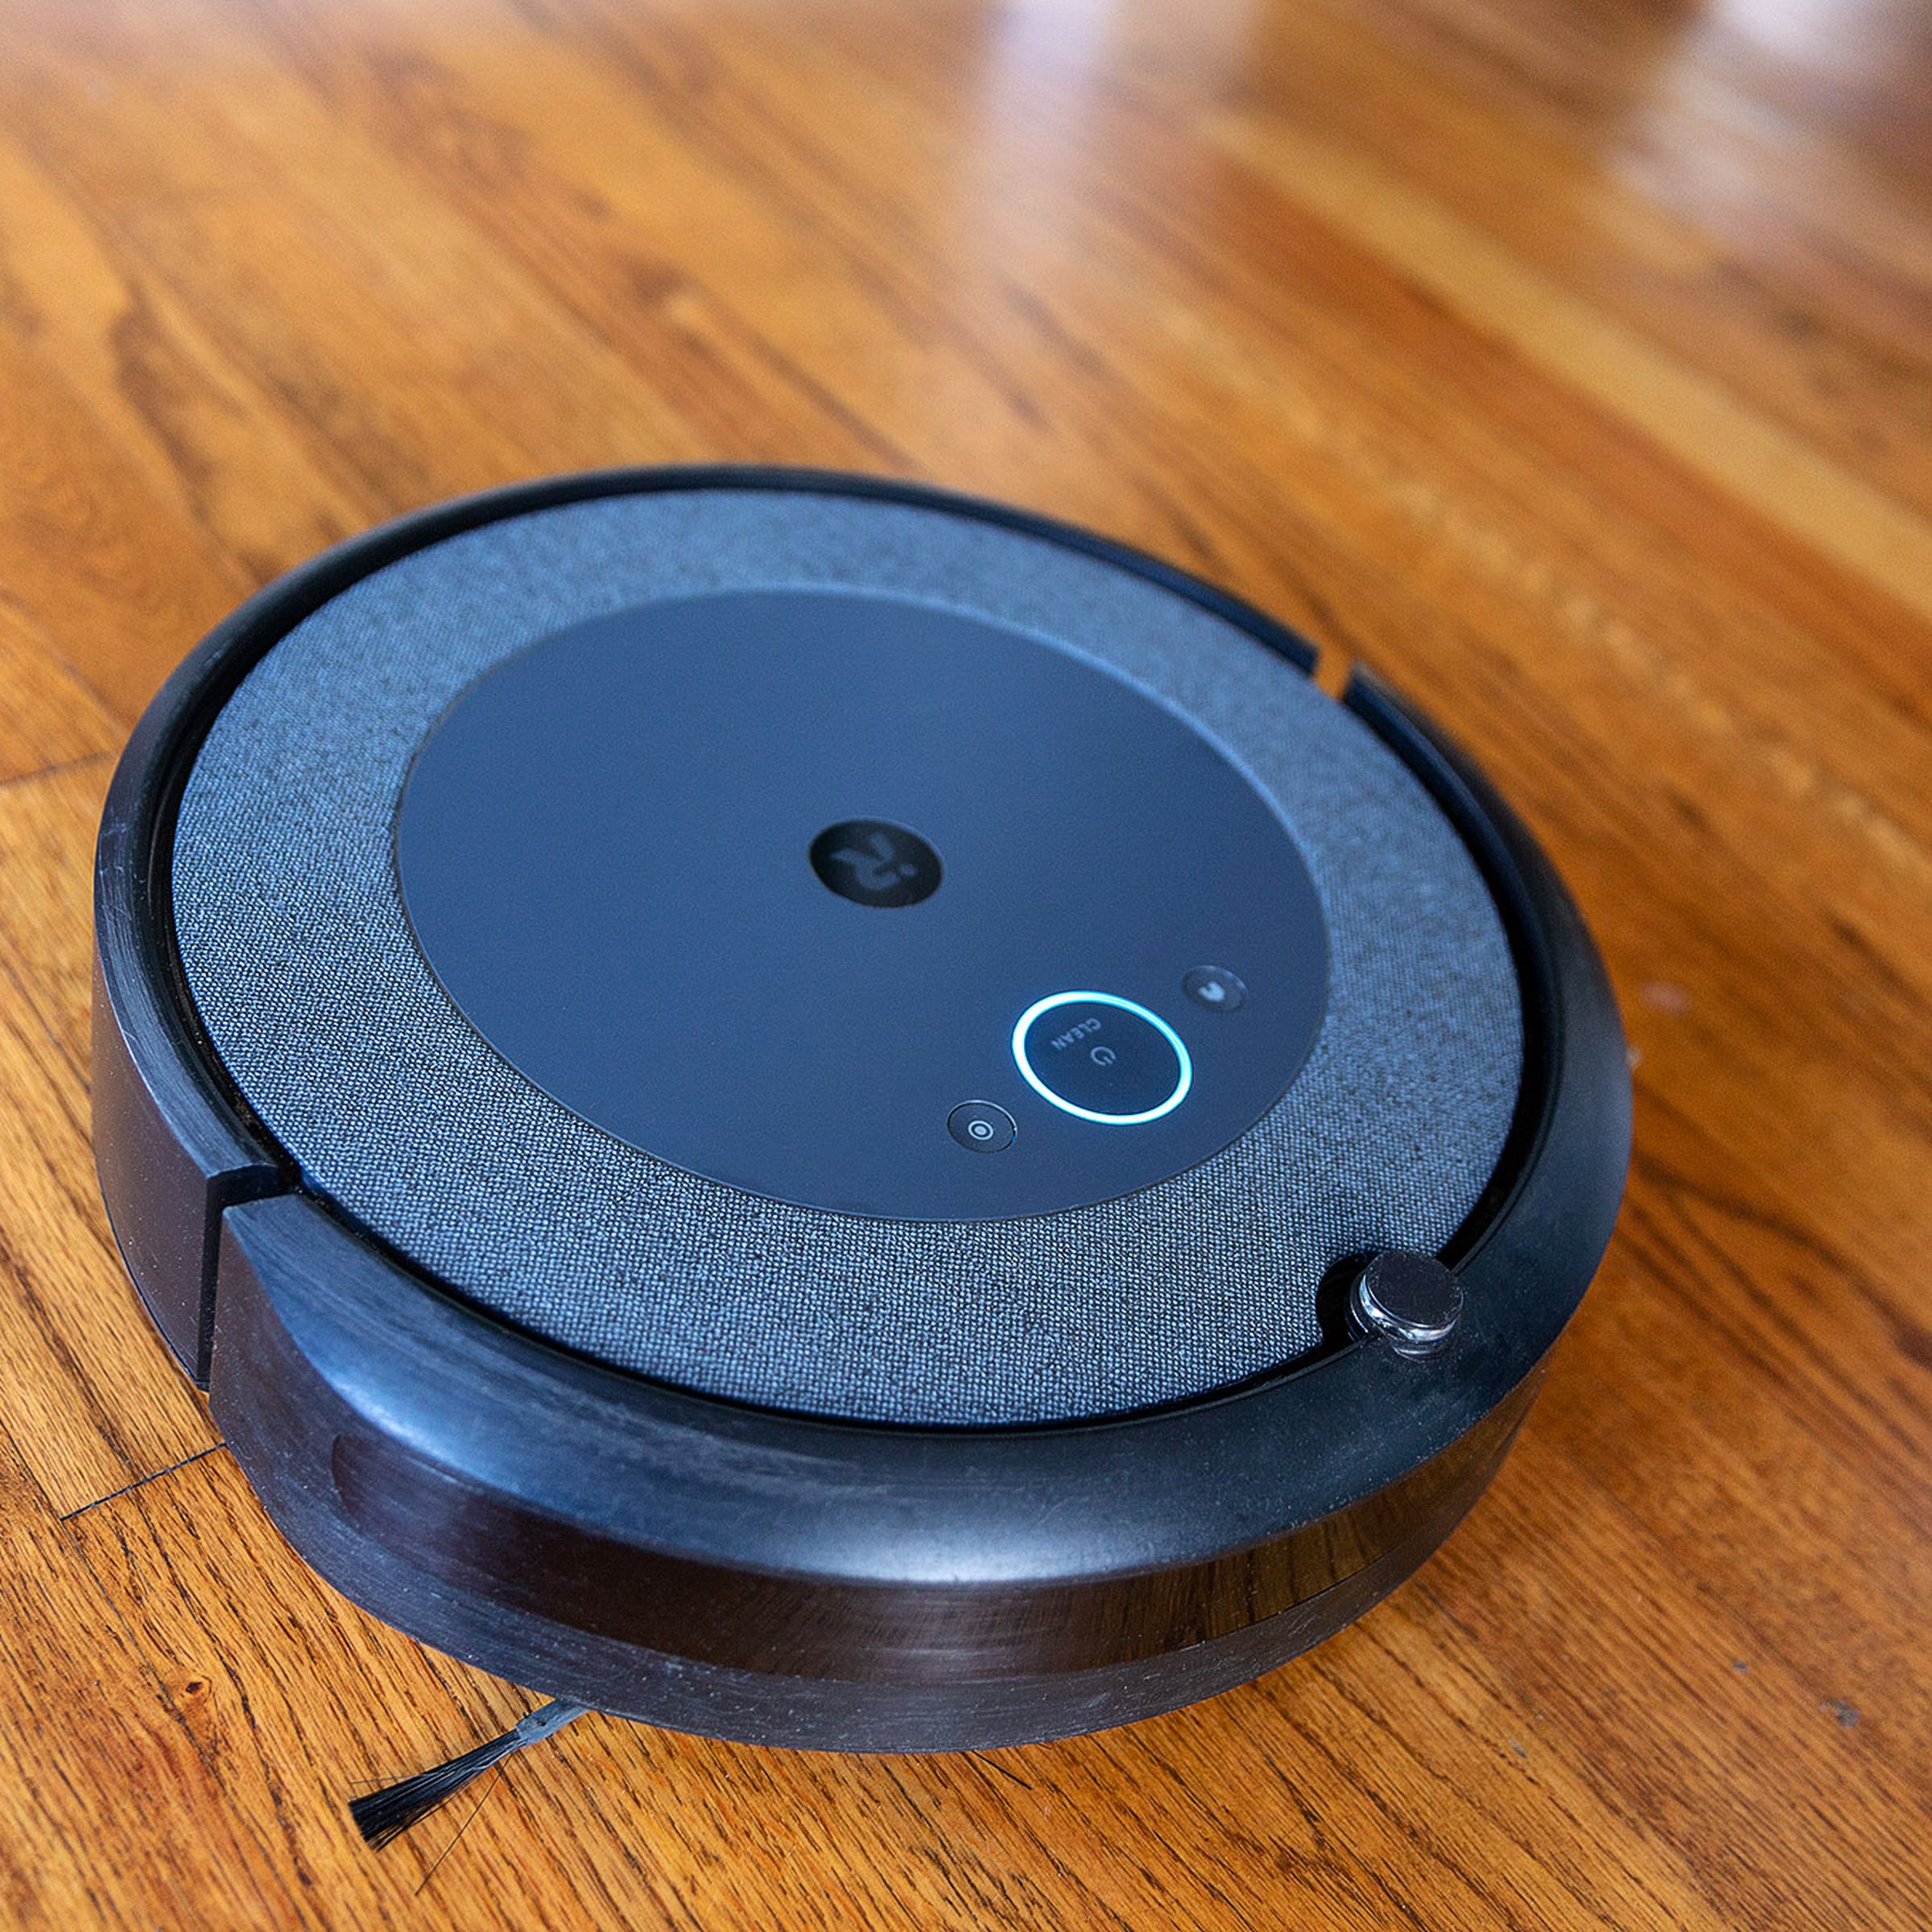 The iRobot Roomba i3 Plus EVO robot vacuum lying on a wooden floor.